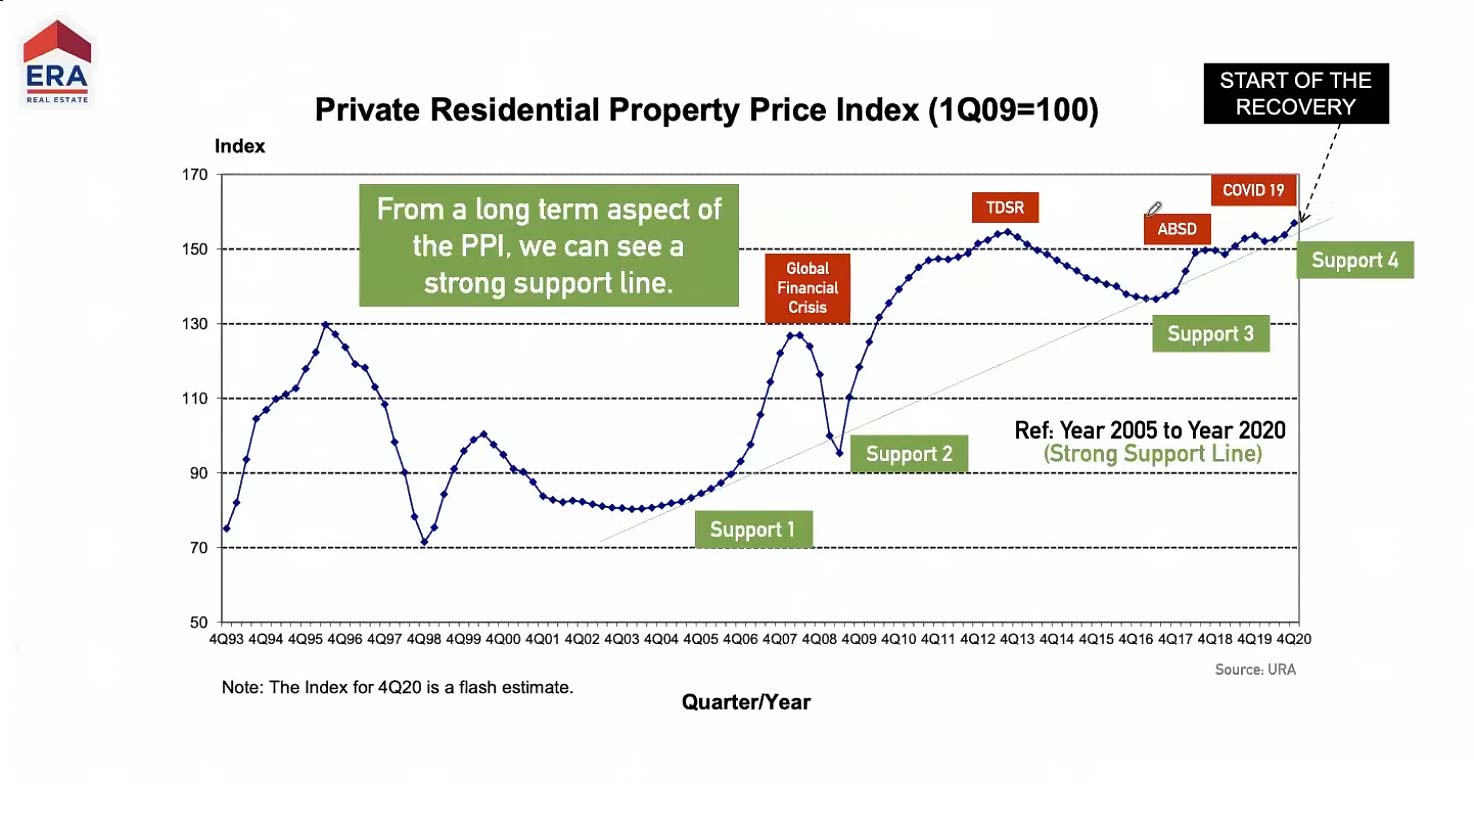 Singapore Property Price Index from Q4'1993 - URA